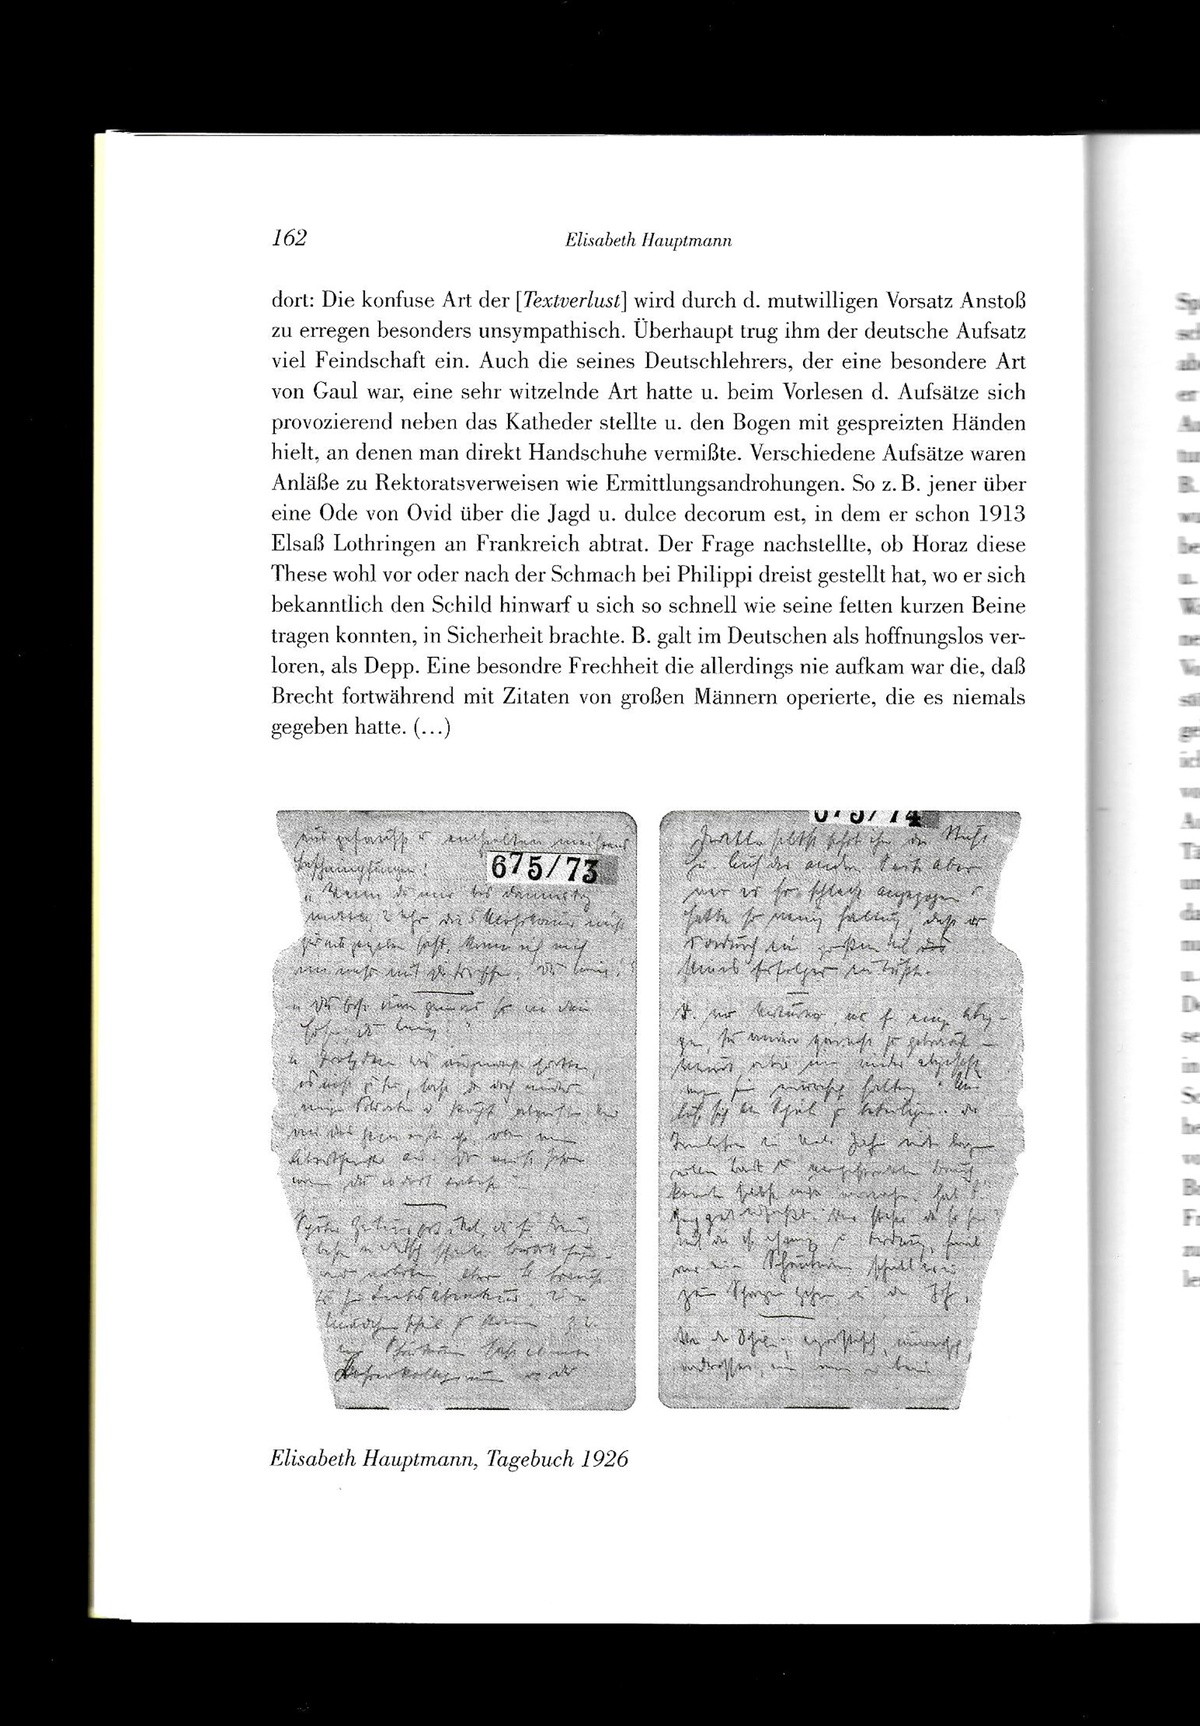 Elisabeth Hauptmann 2 × sehr über ihn geärgert. Diary notes on Brecht.With a prefatory note by Martin Kölbel and Peter Villwock.In Sinn und Form, Heft 2/2021, p. 155-163, here p. 162